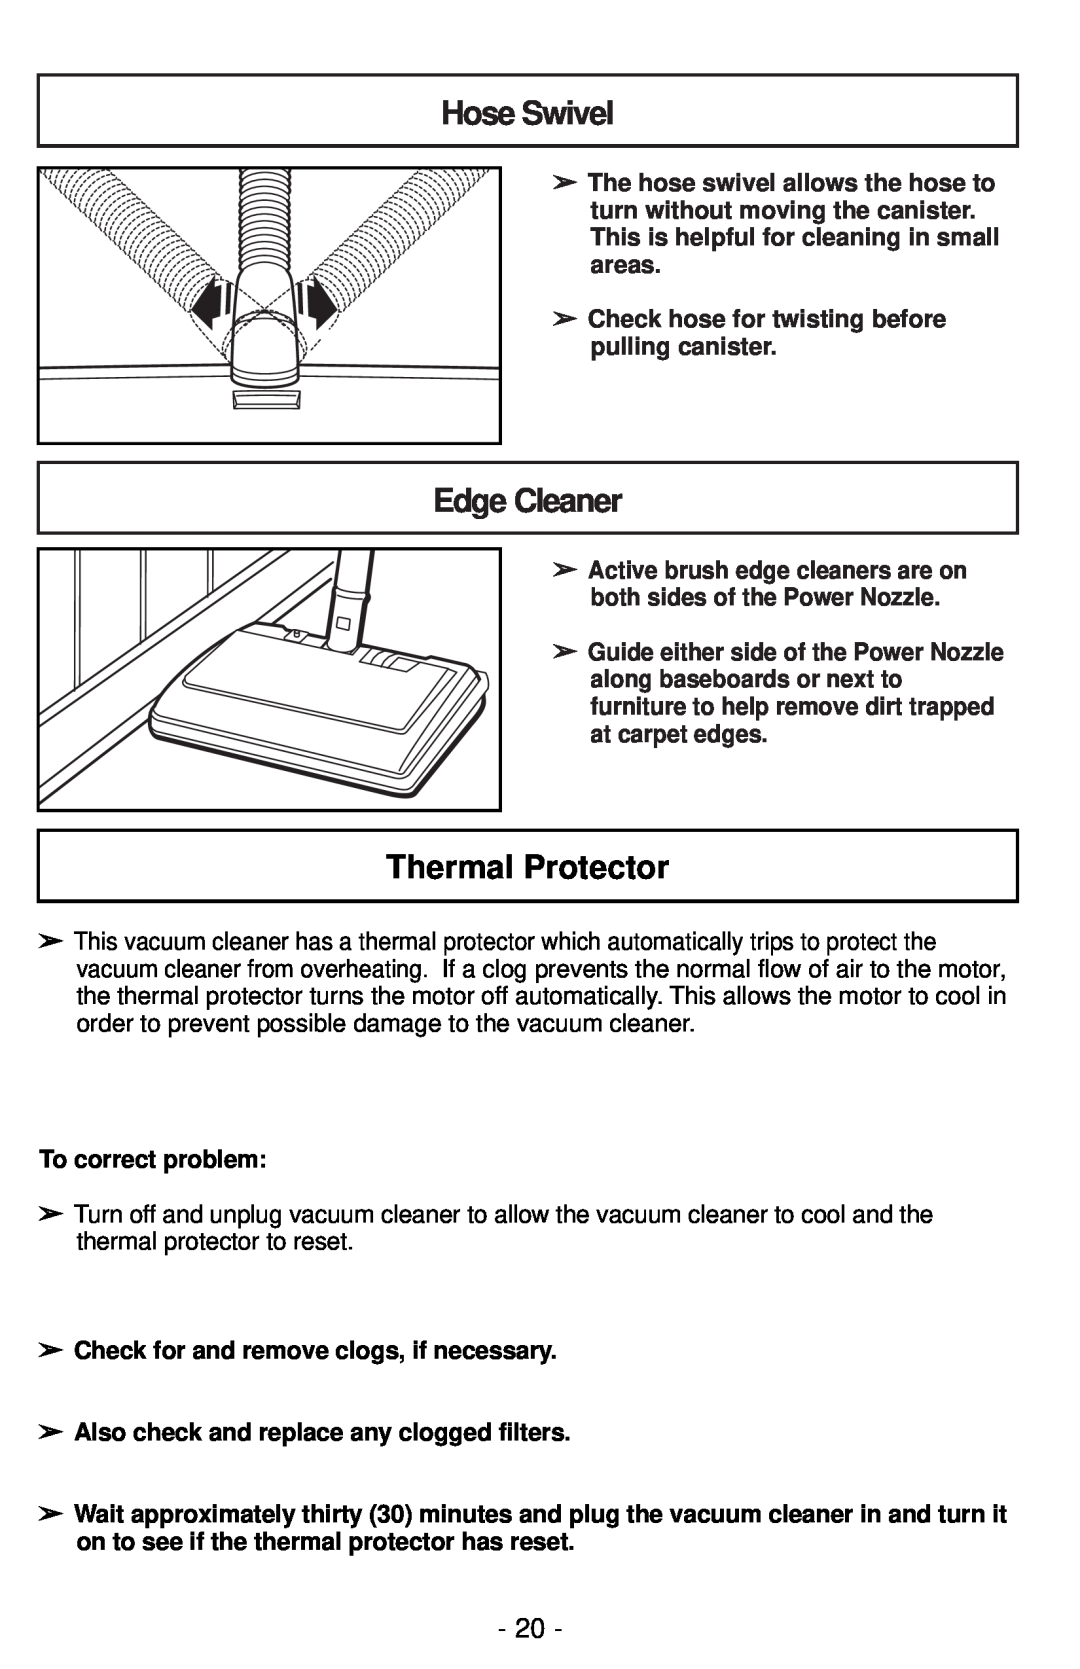 Panasonic MC-CG901 operating instructions Hose Swivel, Edge Cleaner, Thermal Protector 